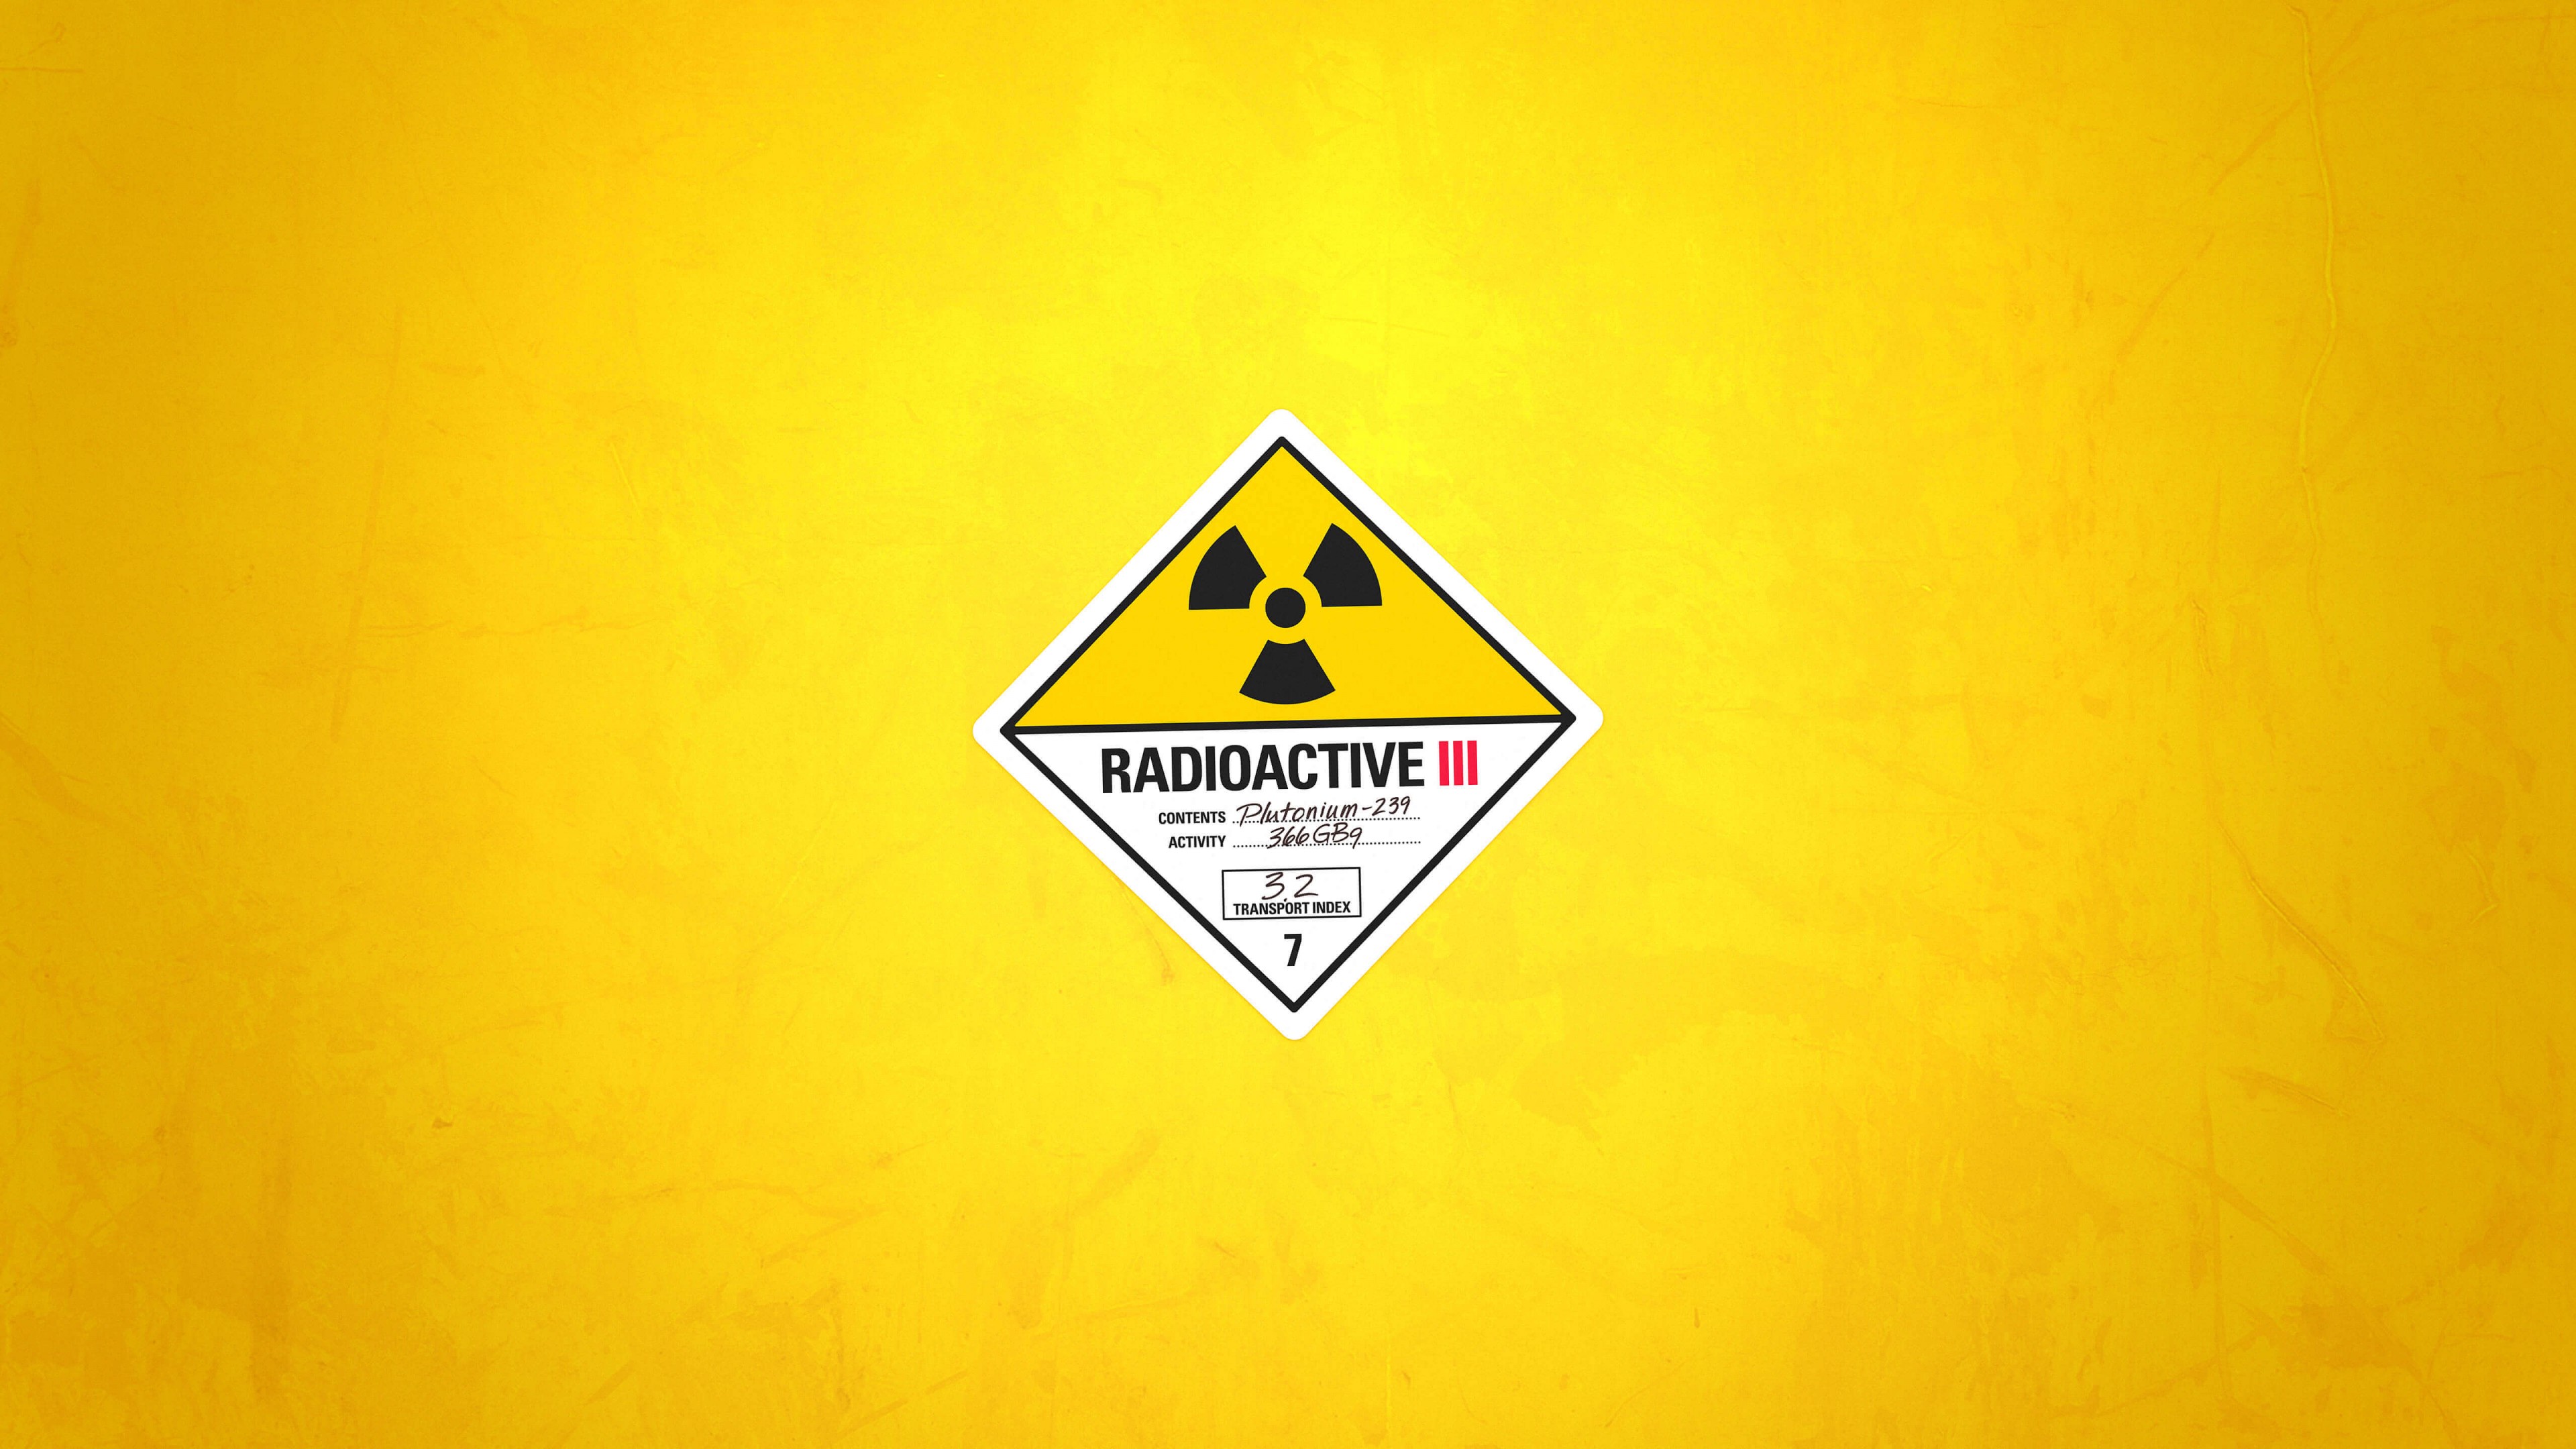 Radioactive Sign Wallpaper 2560x1600  Wallpaper pc Wallpaper Graphic  wallpaper